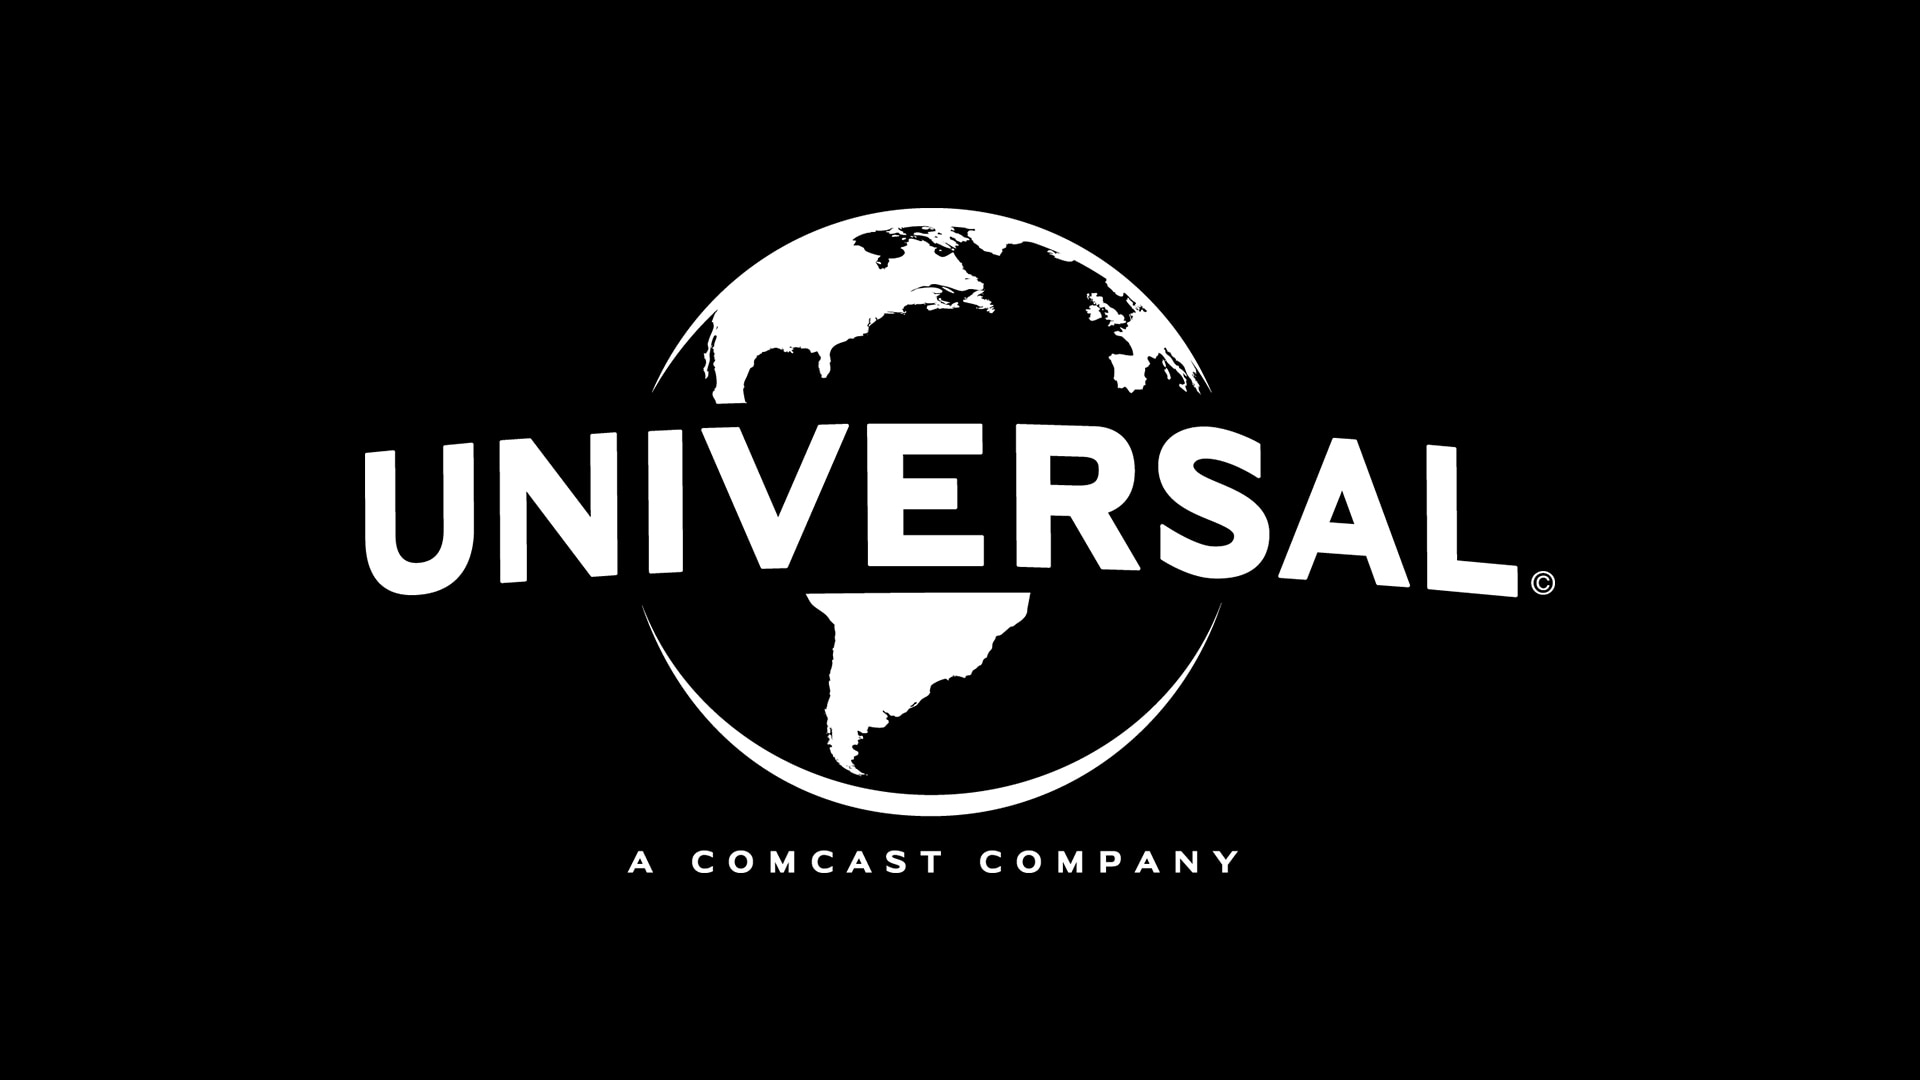 Кинокомпания пикчерз. Юниверсал киностудия логотип. Кинокомпания Universal pictures. Логотип компании Юниверсал пикчерс. Юнивёрсал пикчерс логотип 1912.